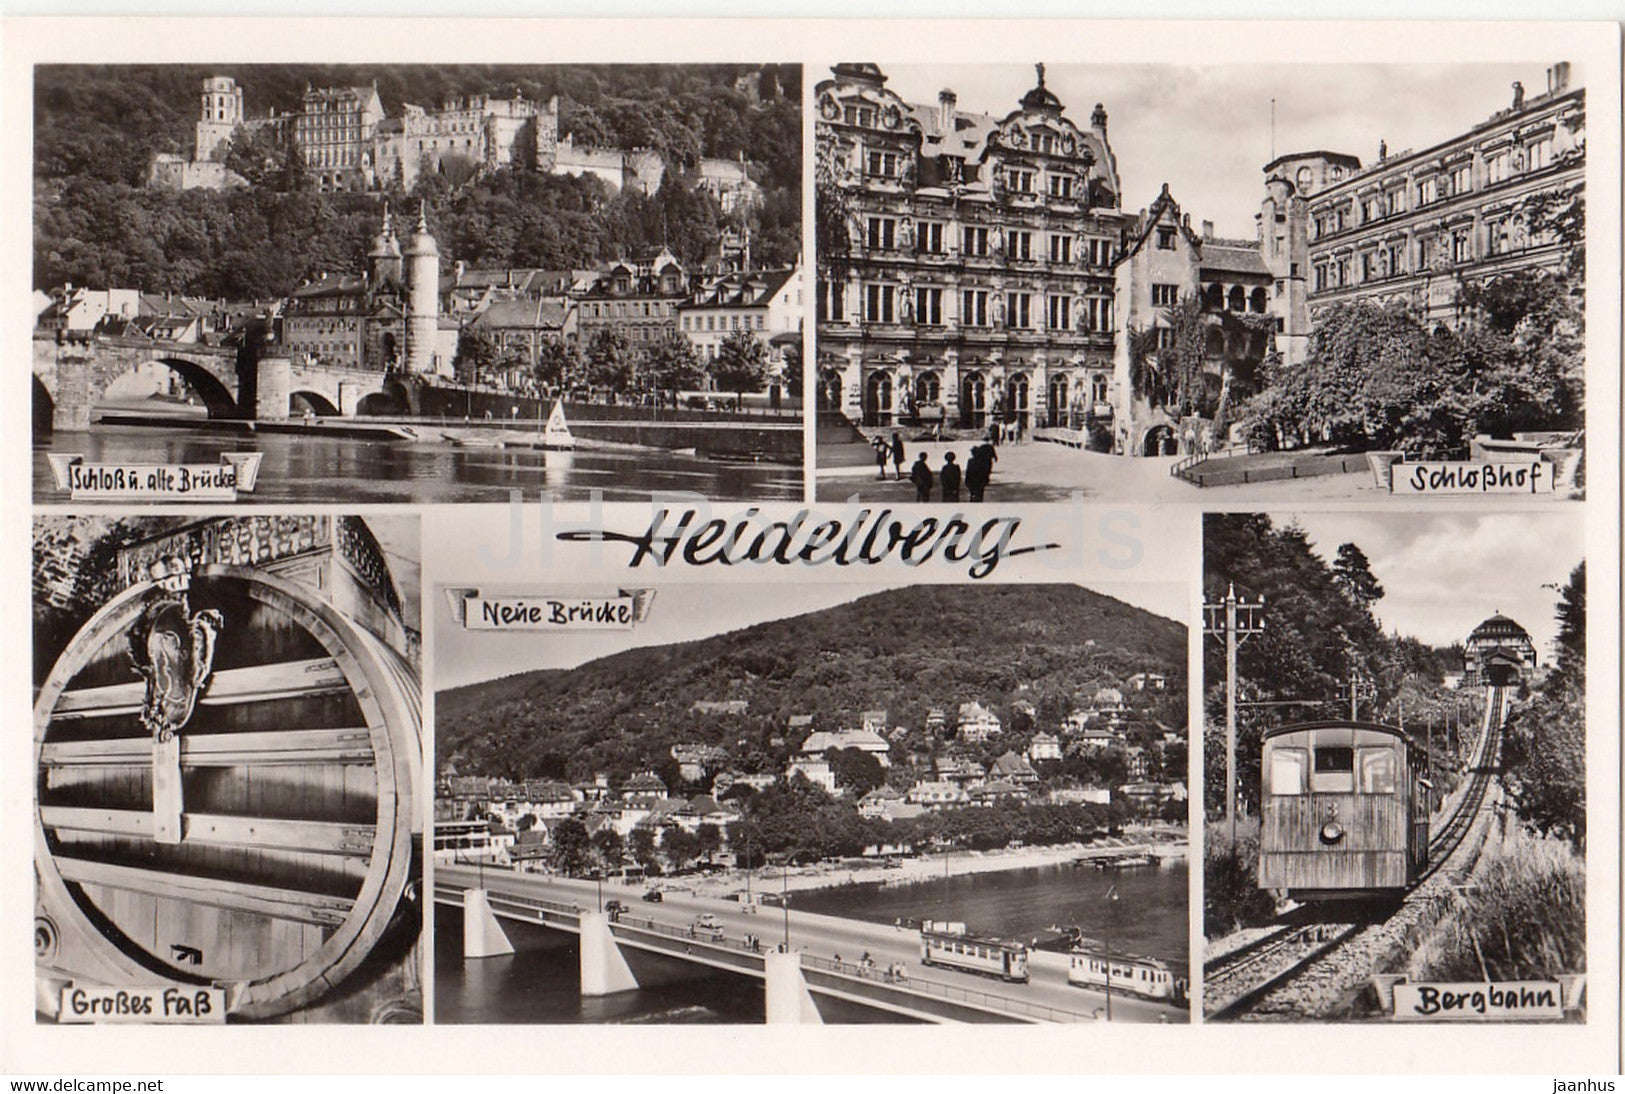 Heidelberg - Schloss u Alte Brucke - Schlosshof - Bergbahn - funicular - 1954 - Germany - used - JH Postcards